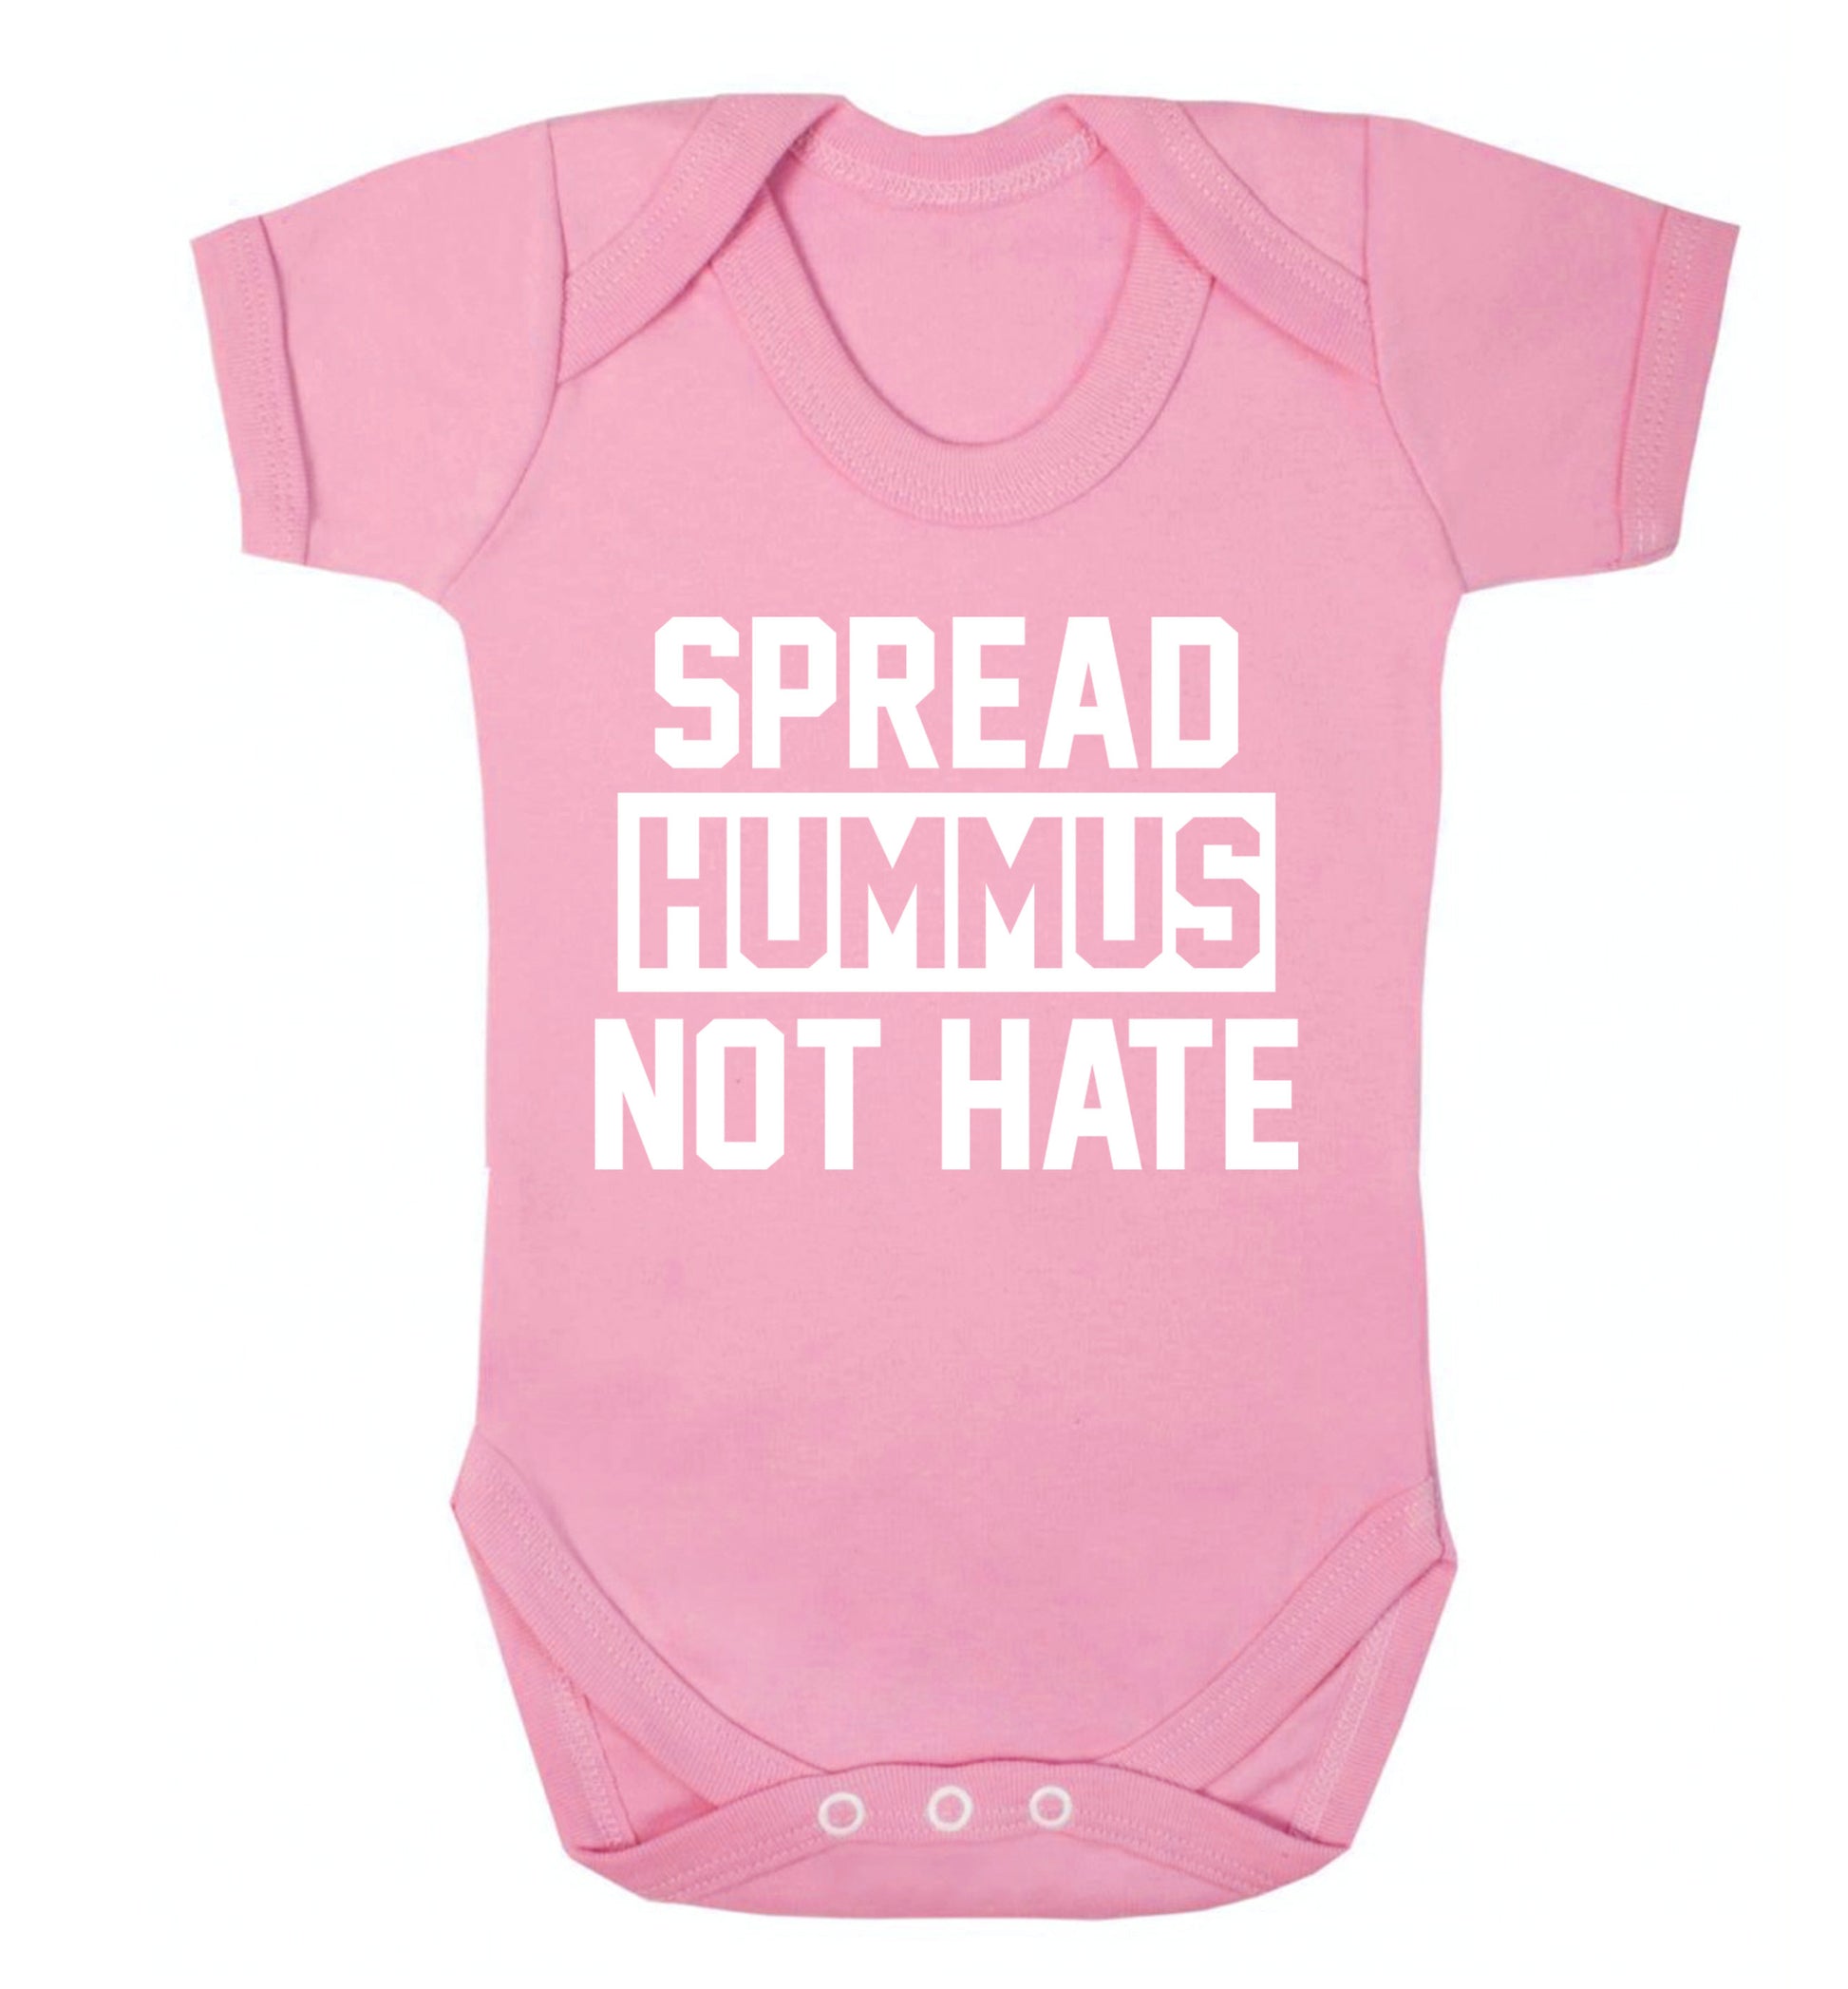 Spread hummus not hate Baby Vest pale pink 18-24 months